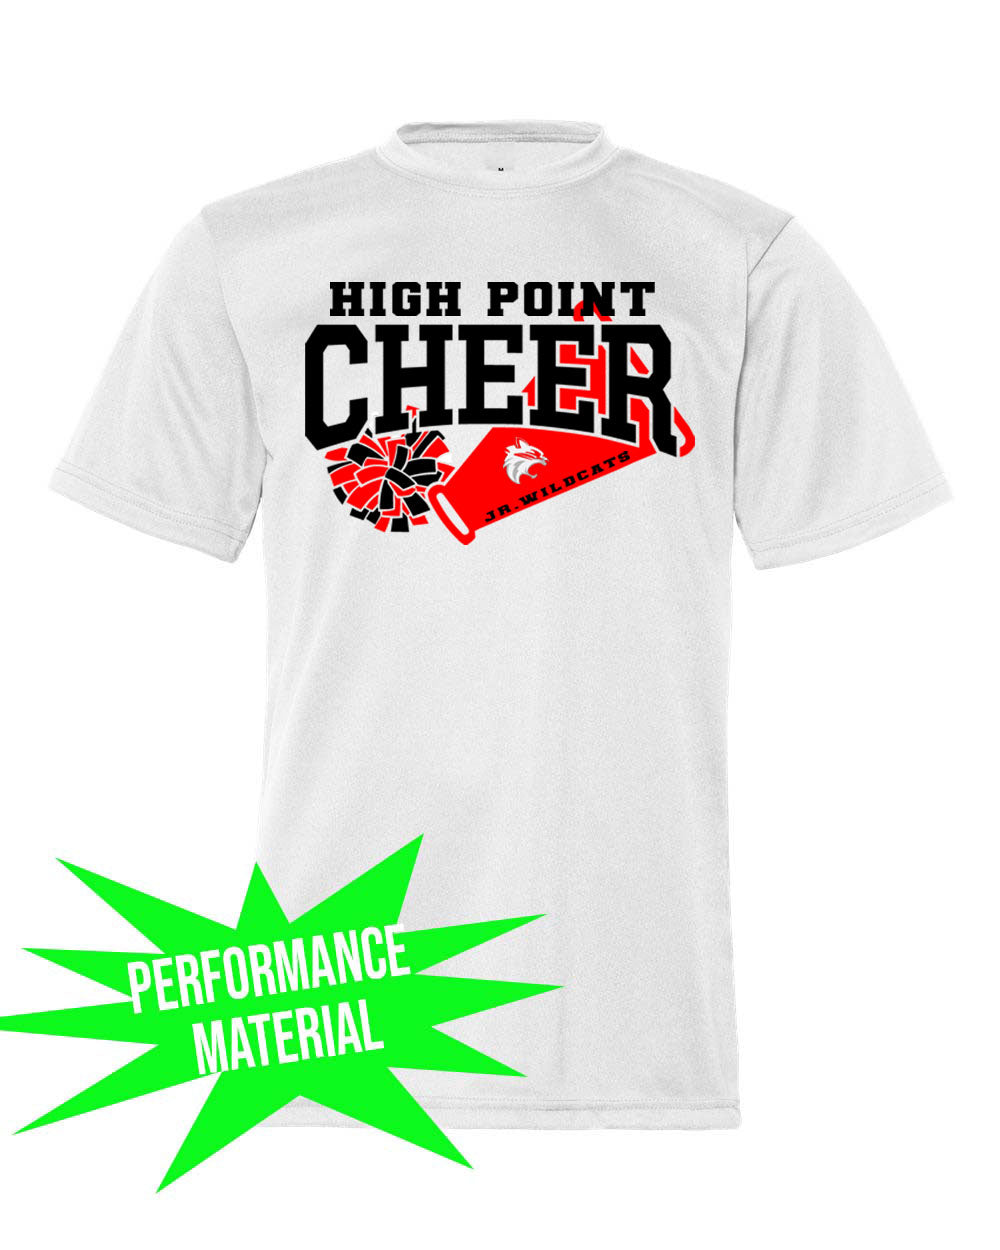 High Point Cheer Performance Material design 1 T-Shirt